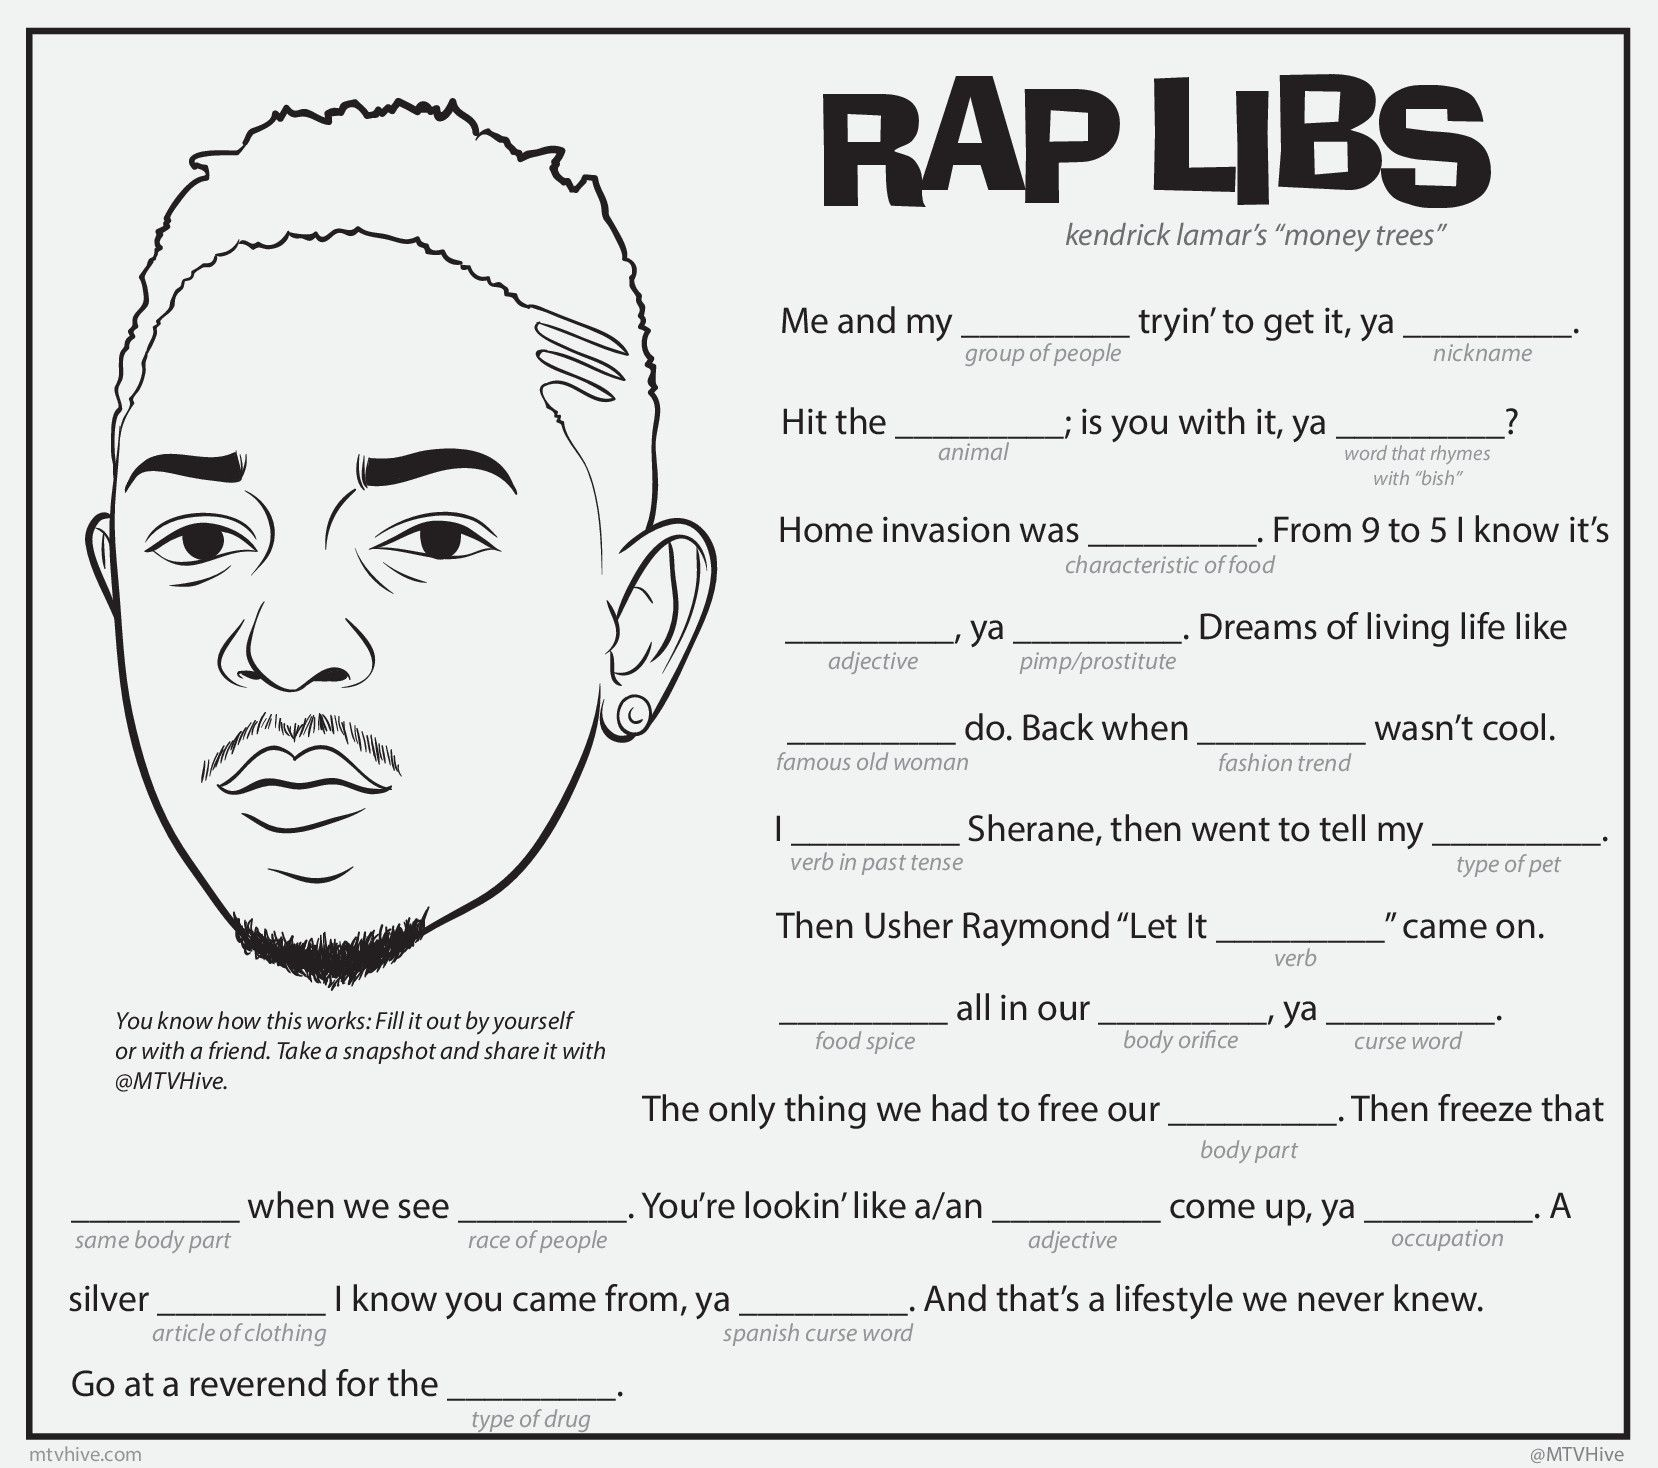 Play Rap Libs With Kendrick Lamar s Money Trees Funny Mad Libs Rap 